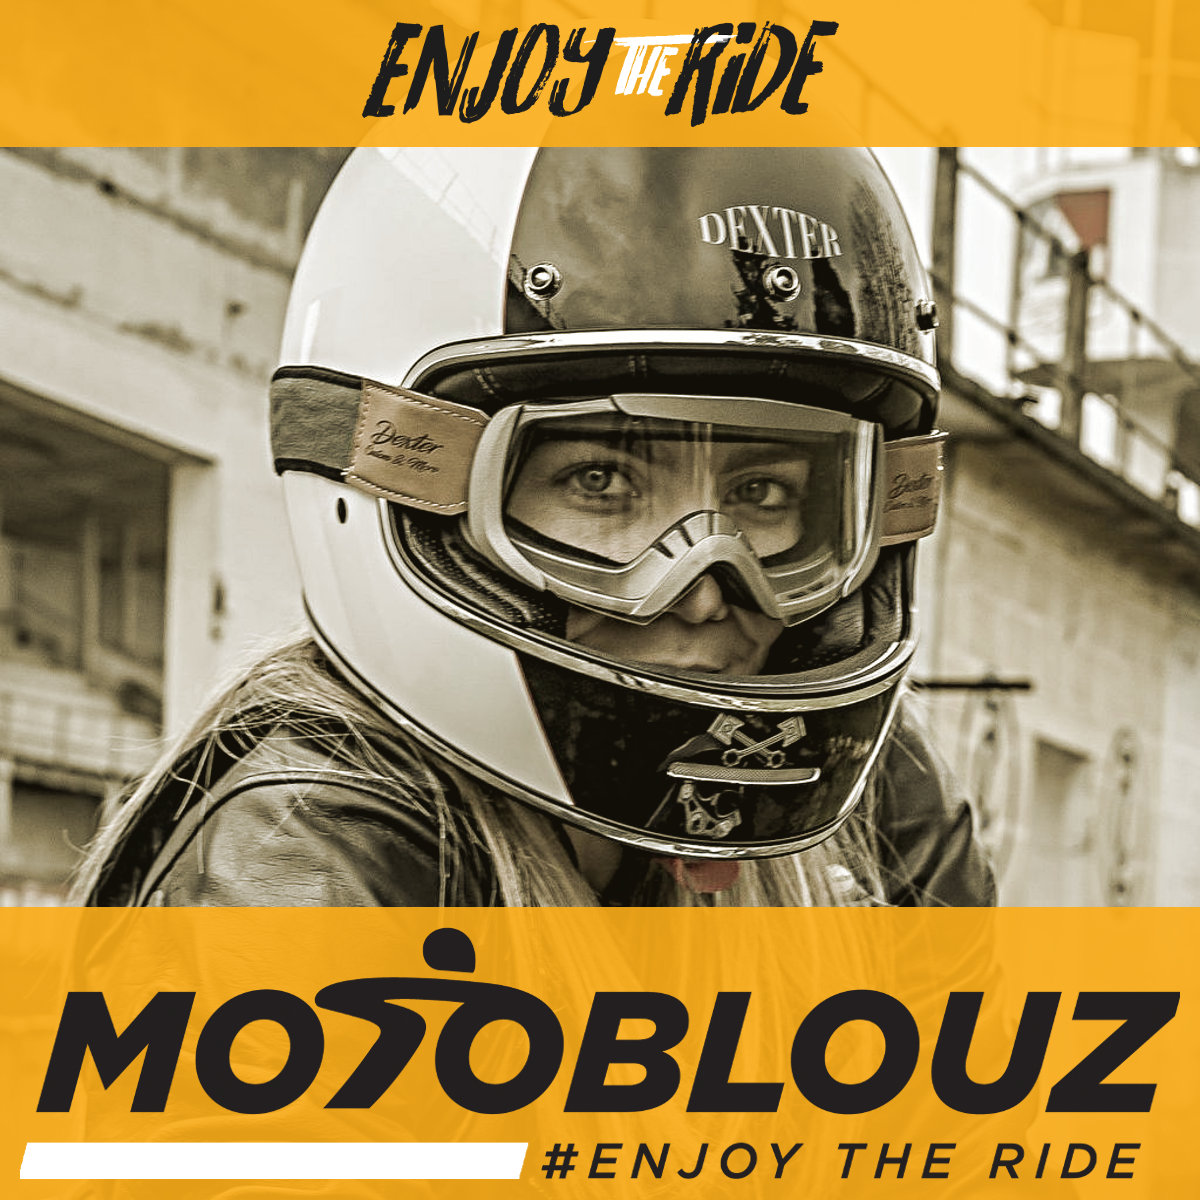 Motoblouz
Equipement pour motos, motards et motardes.